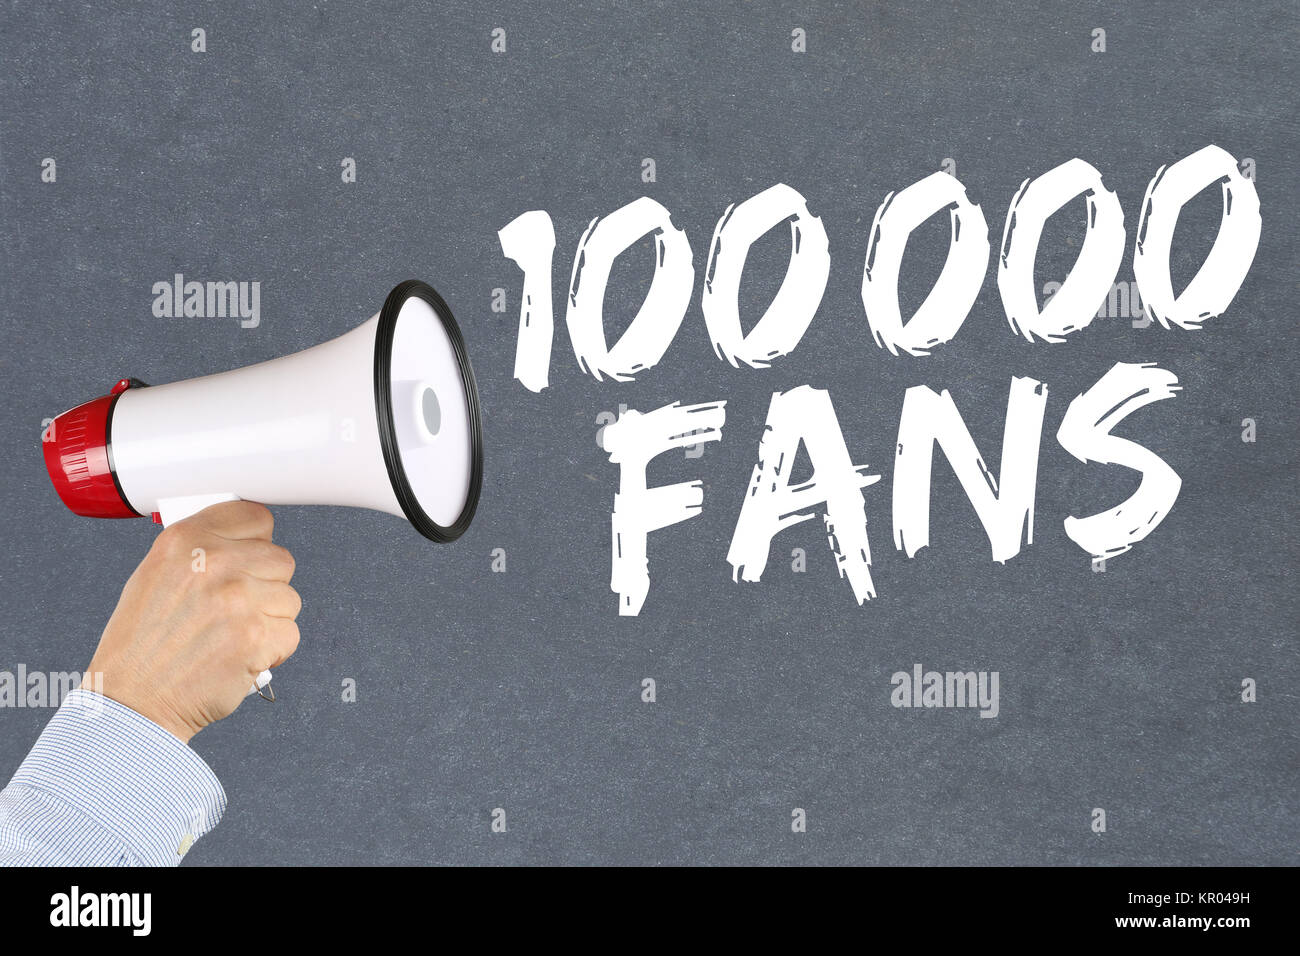 100000 fans likes social media networks concept of megafon Stock Photo